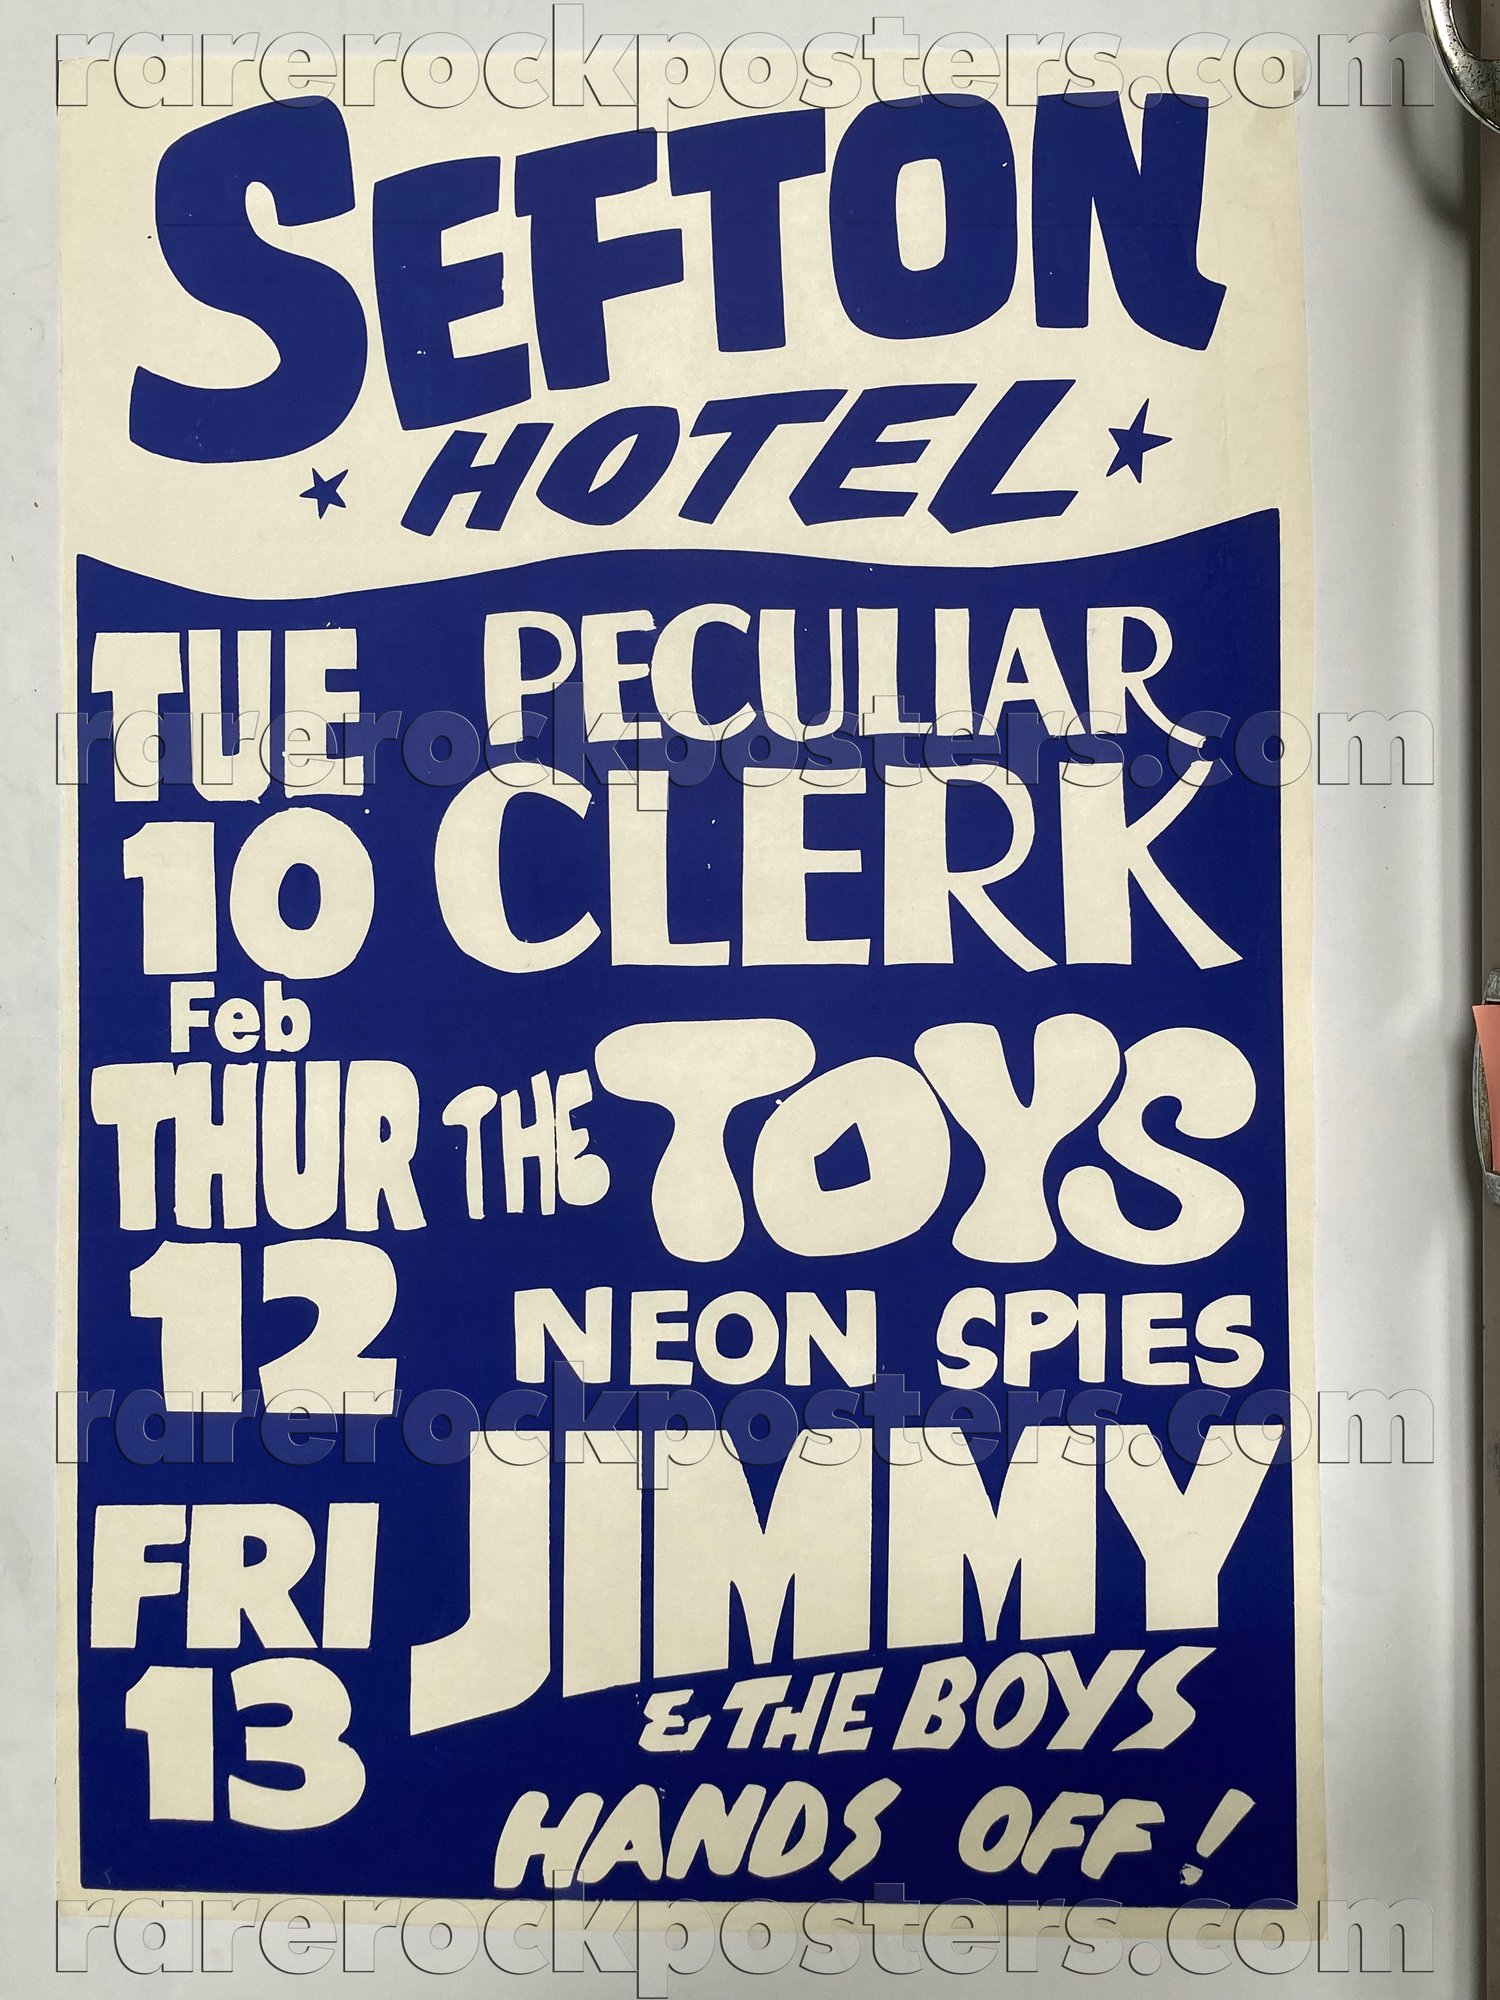 JIMMY & THE BOYS / THE TOYS / PECULIAR CLERK / NEON SPYS ~ ORIG 1981 AUST GIG POSTER ~ SEFTON HOTEL